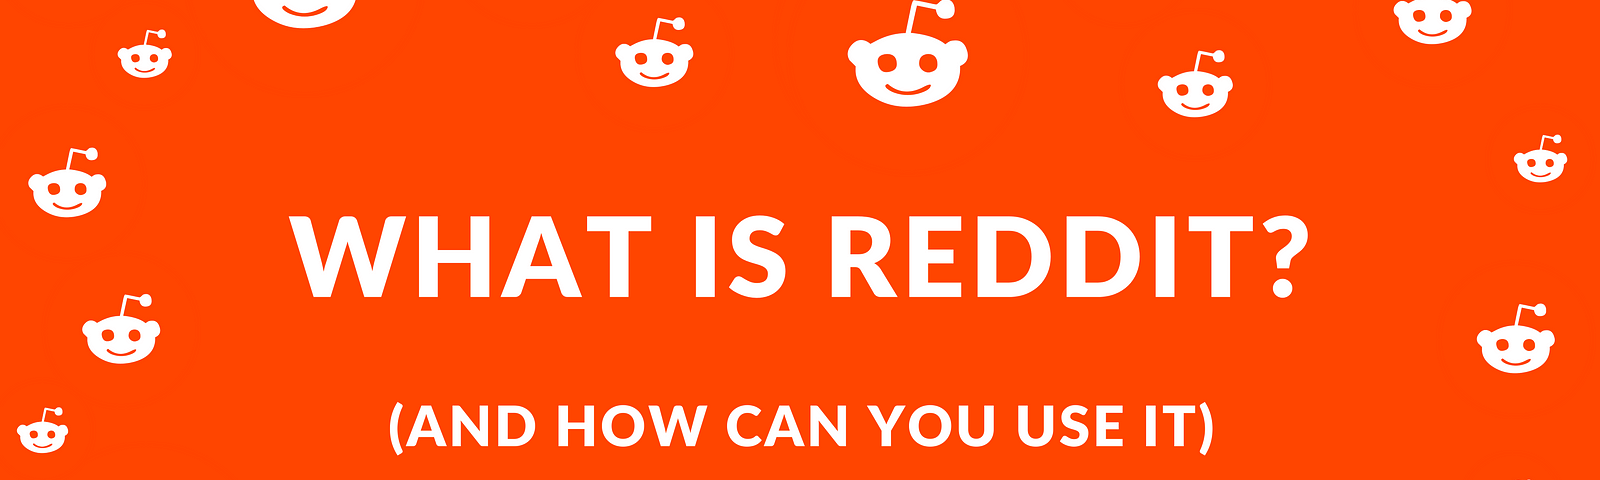 reddit overview, reddit user overview, what is reddit, how to use reddit effectively, reddit tips and tricks, how to reddit